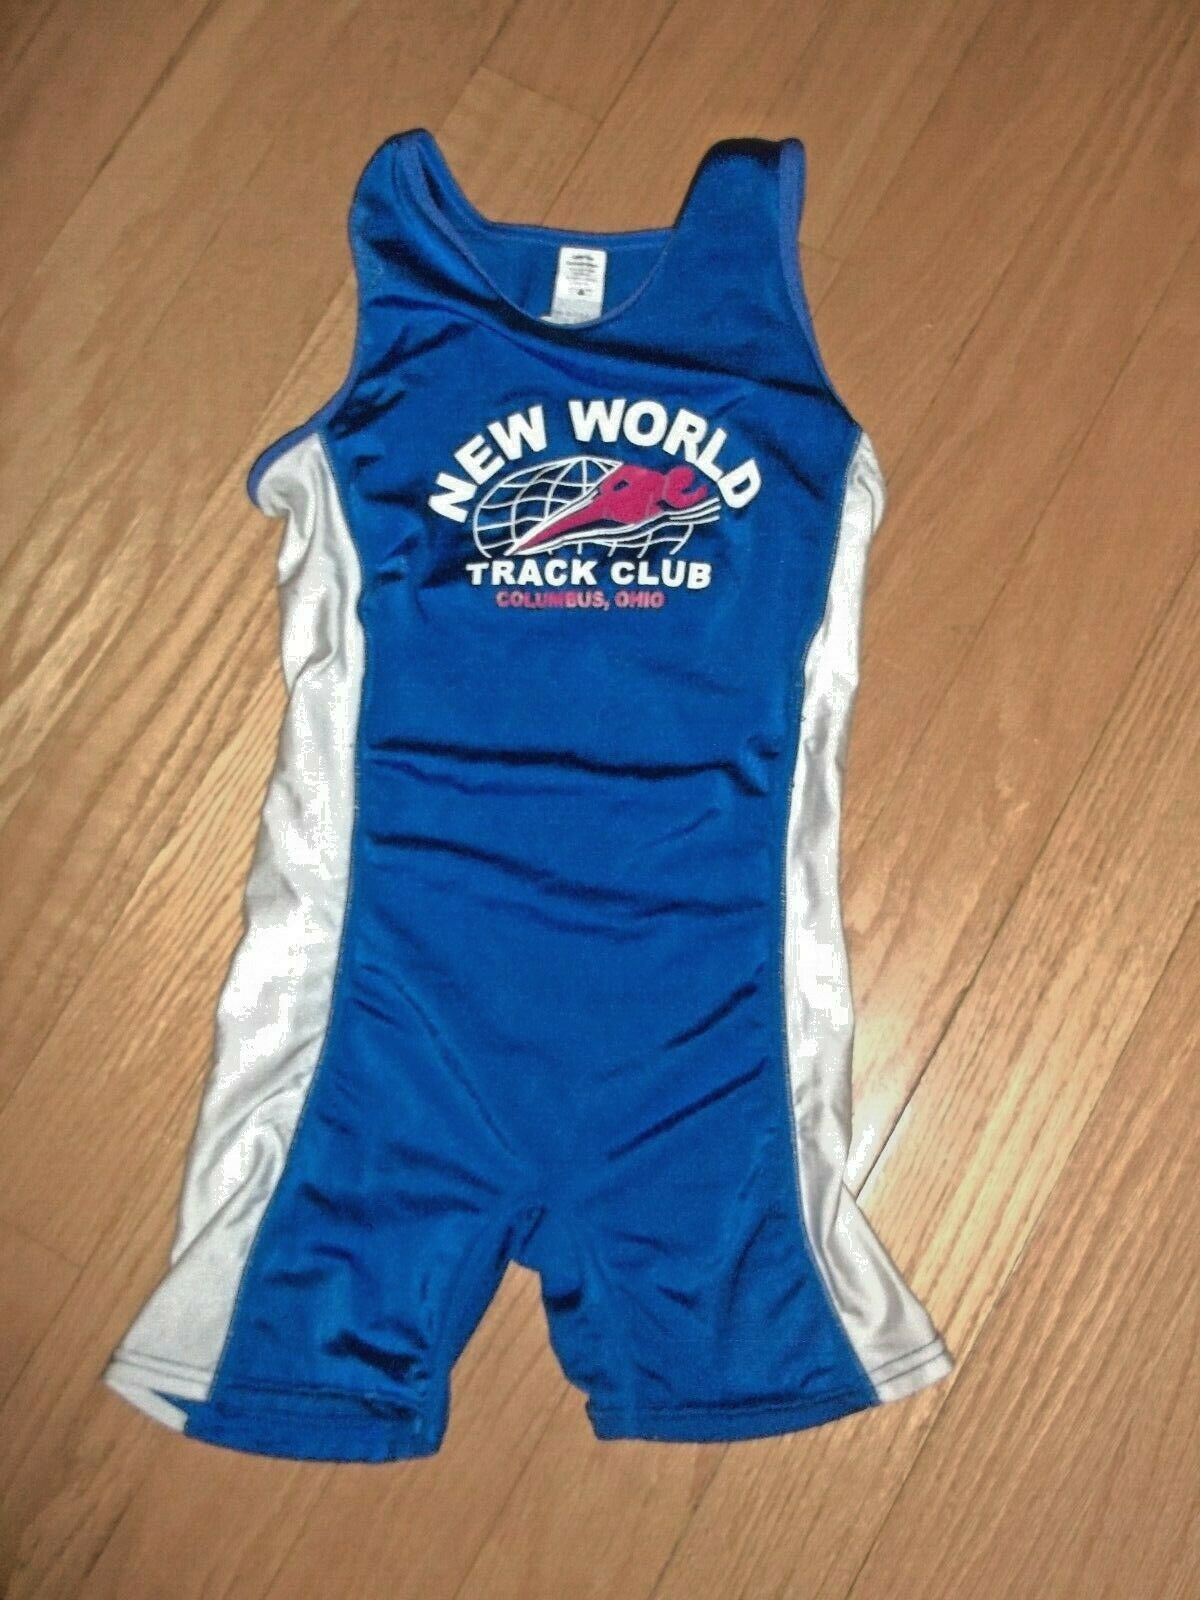 NEW WORLD TRACK CLUB(COLUMBUS OHIO) YOUTH SMALL TRACK RUNNING SUIT USA MADE*EUC*